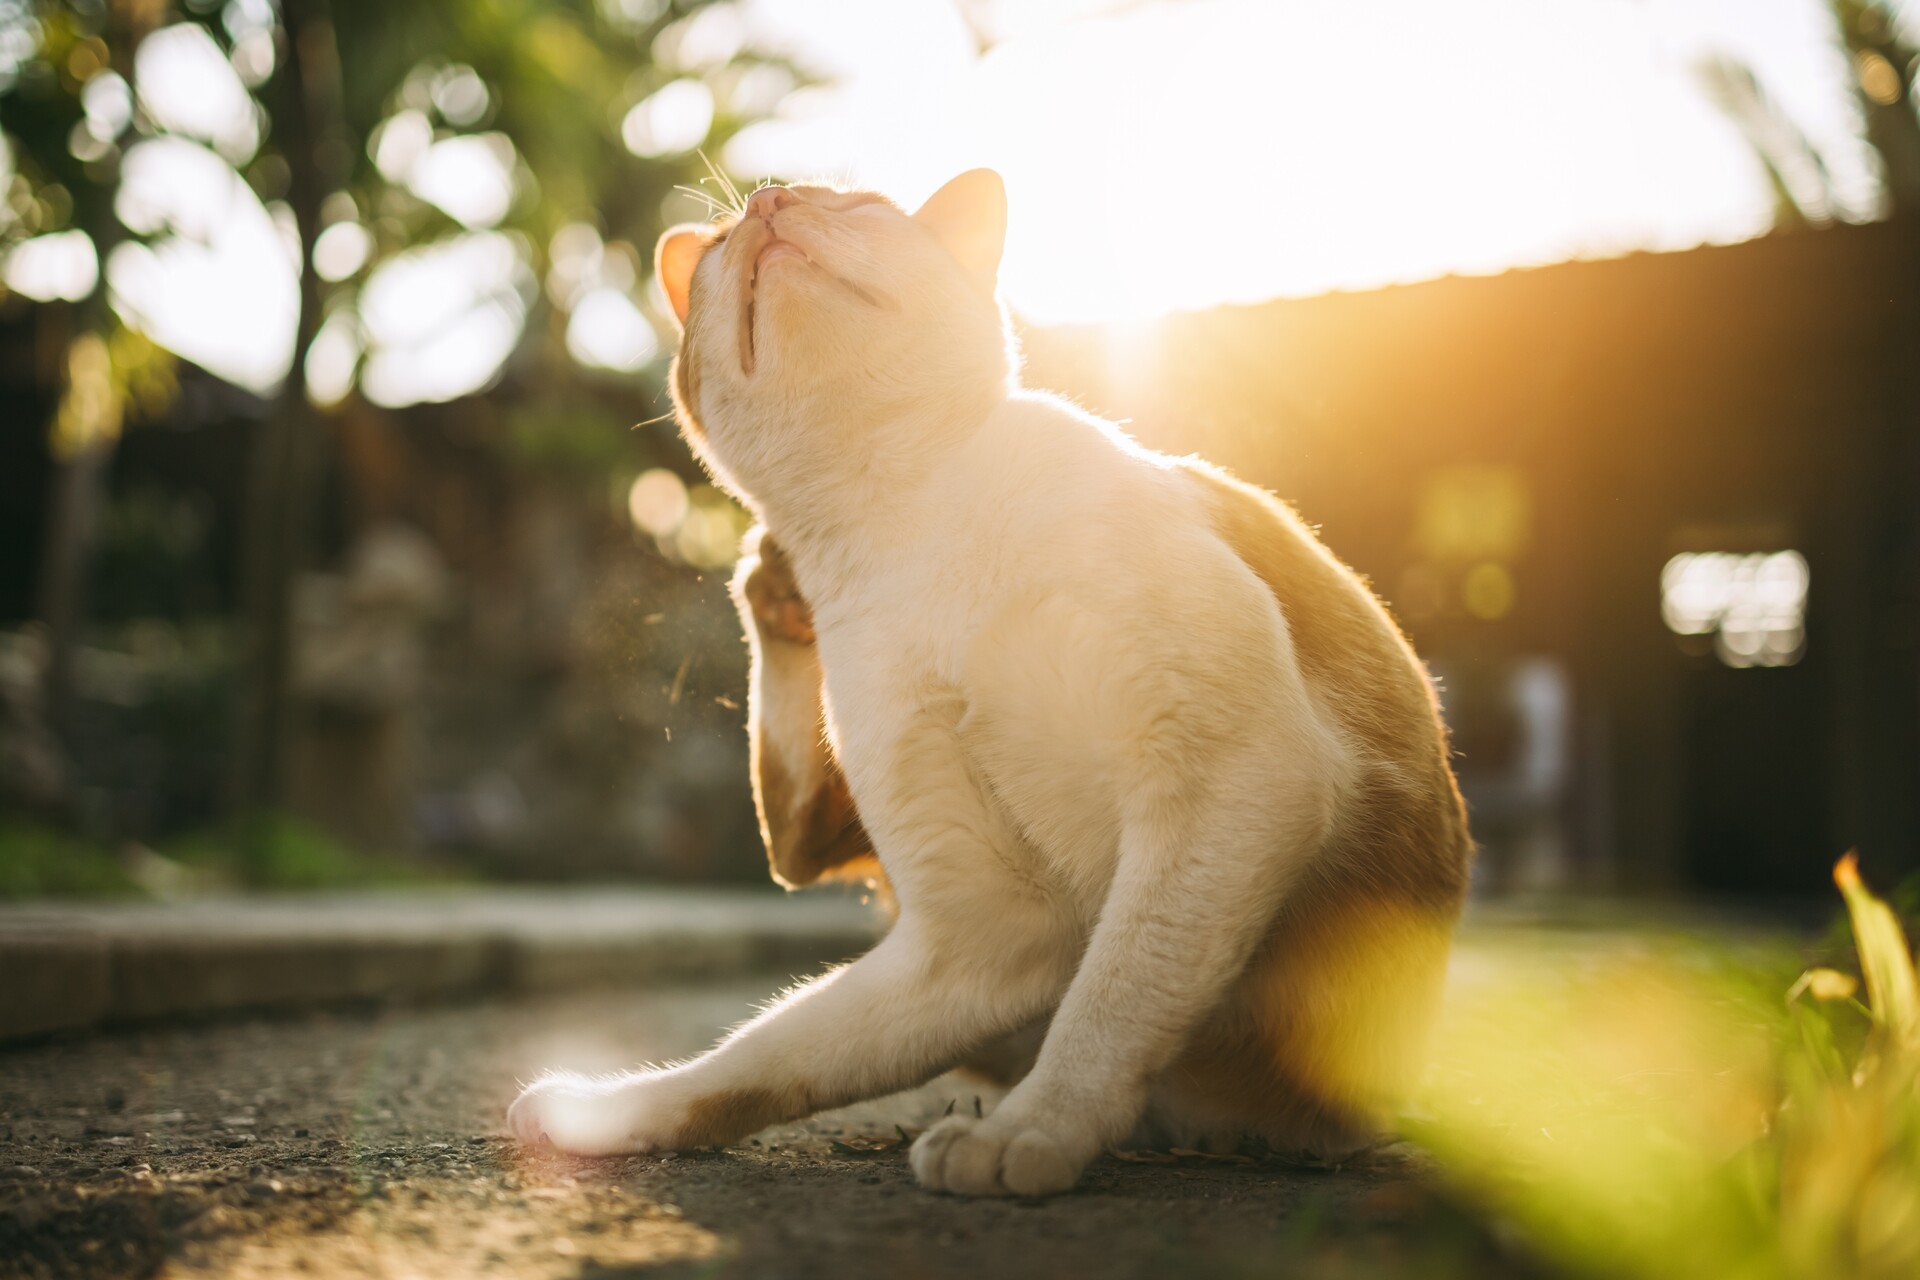 A cat scratching itself in a sunny spot